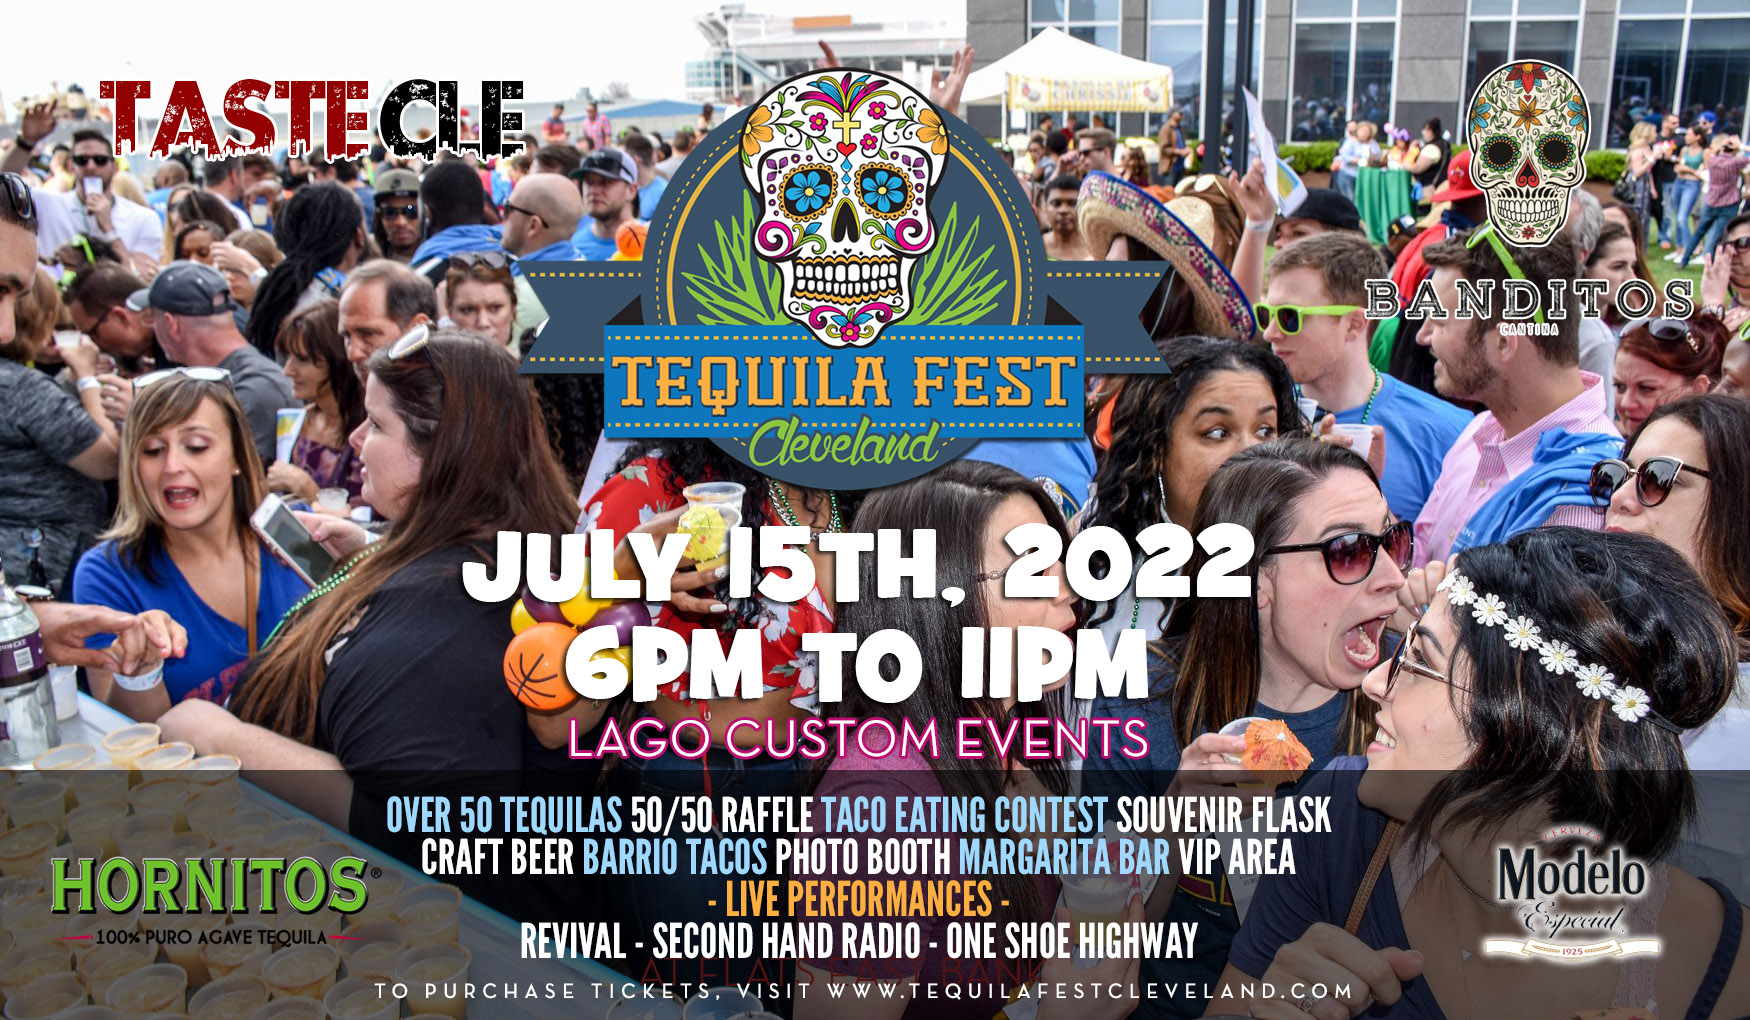 Tequila Fest Cleveland 2022 Taste Festivals & Events